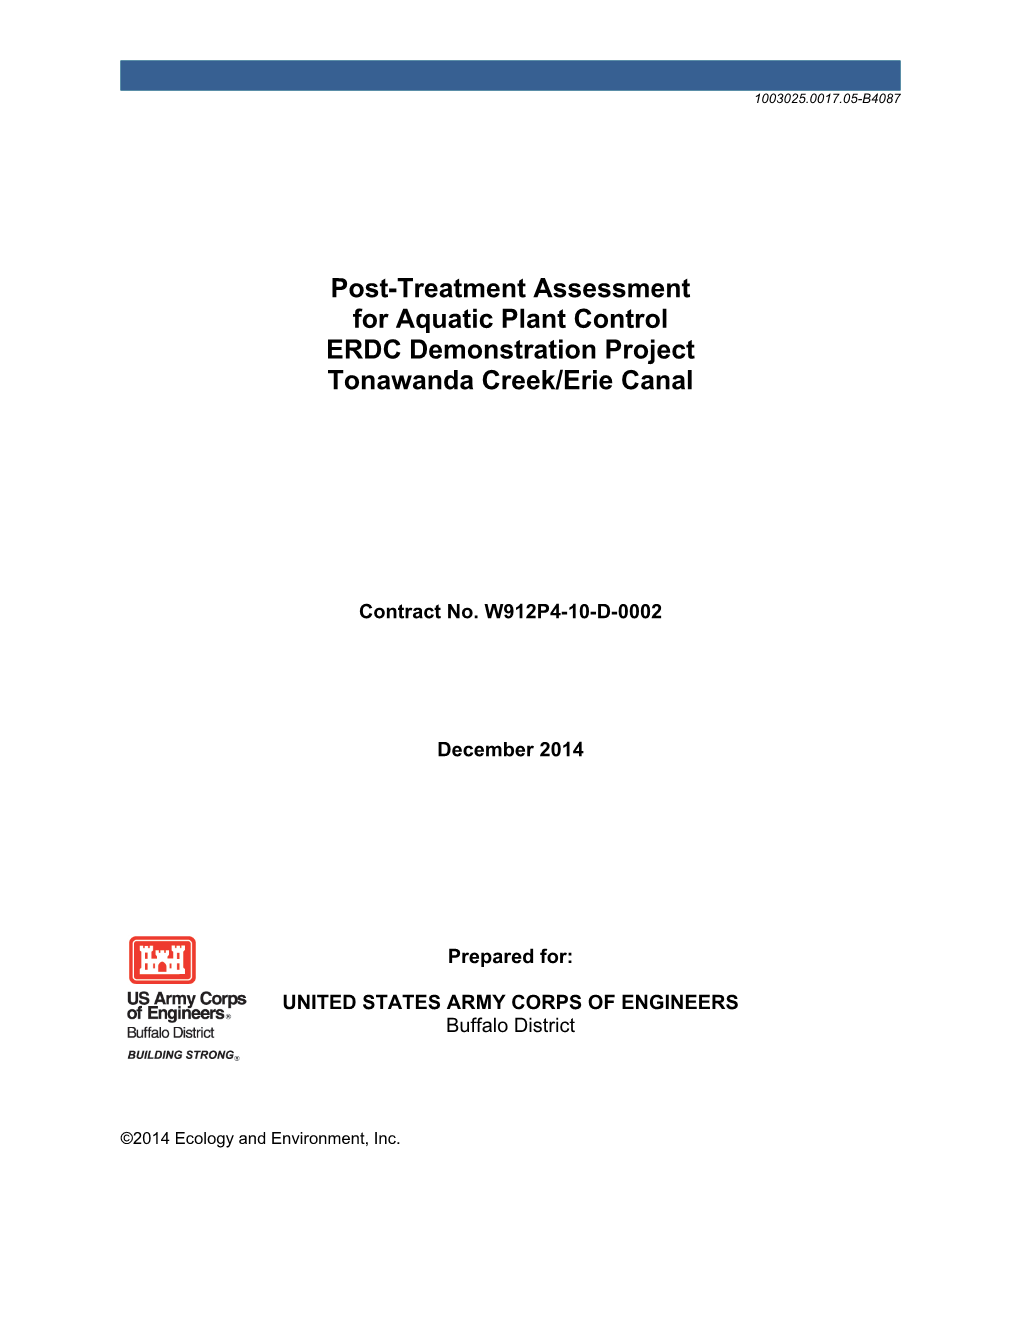 Post-Treatment Assessment for Aquatic Plant Control ERDC Demonstration Project Tonawanda Creek/Erie Canal